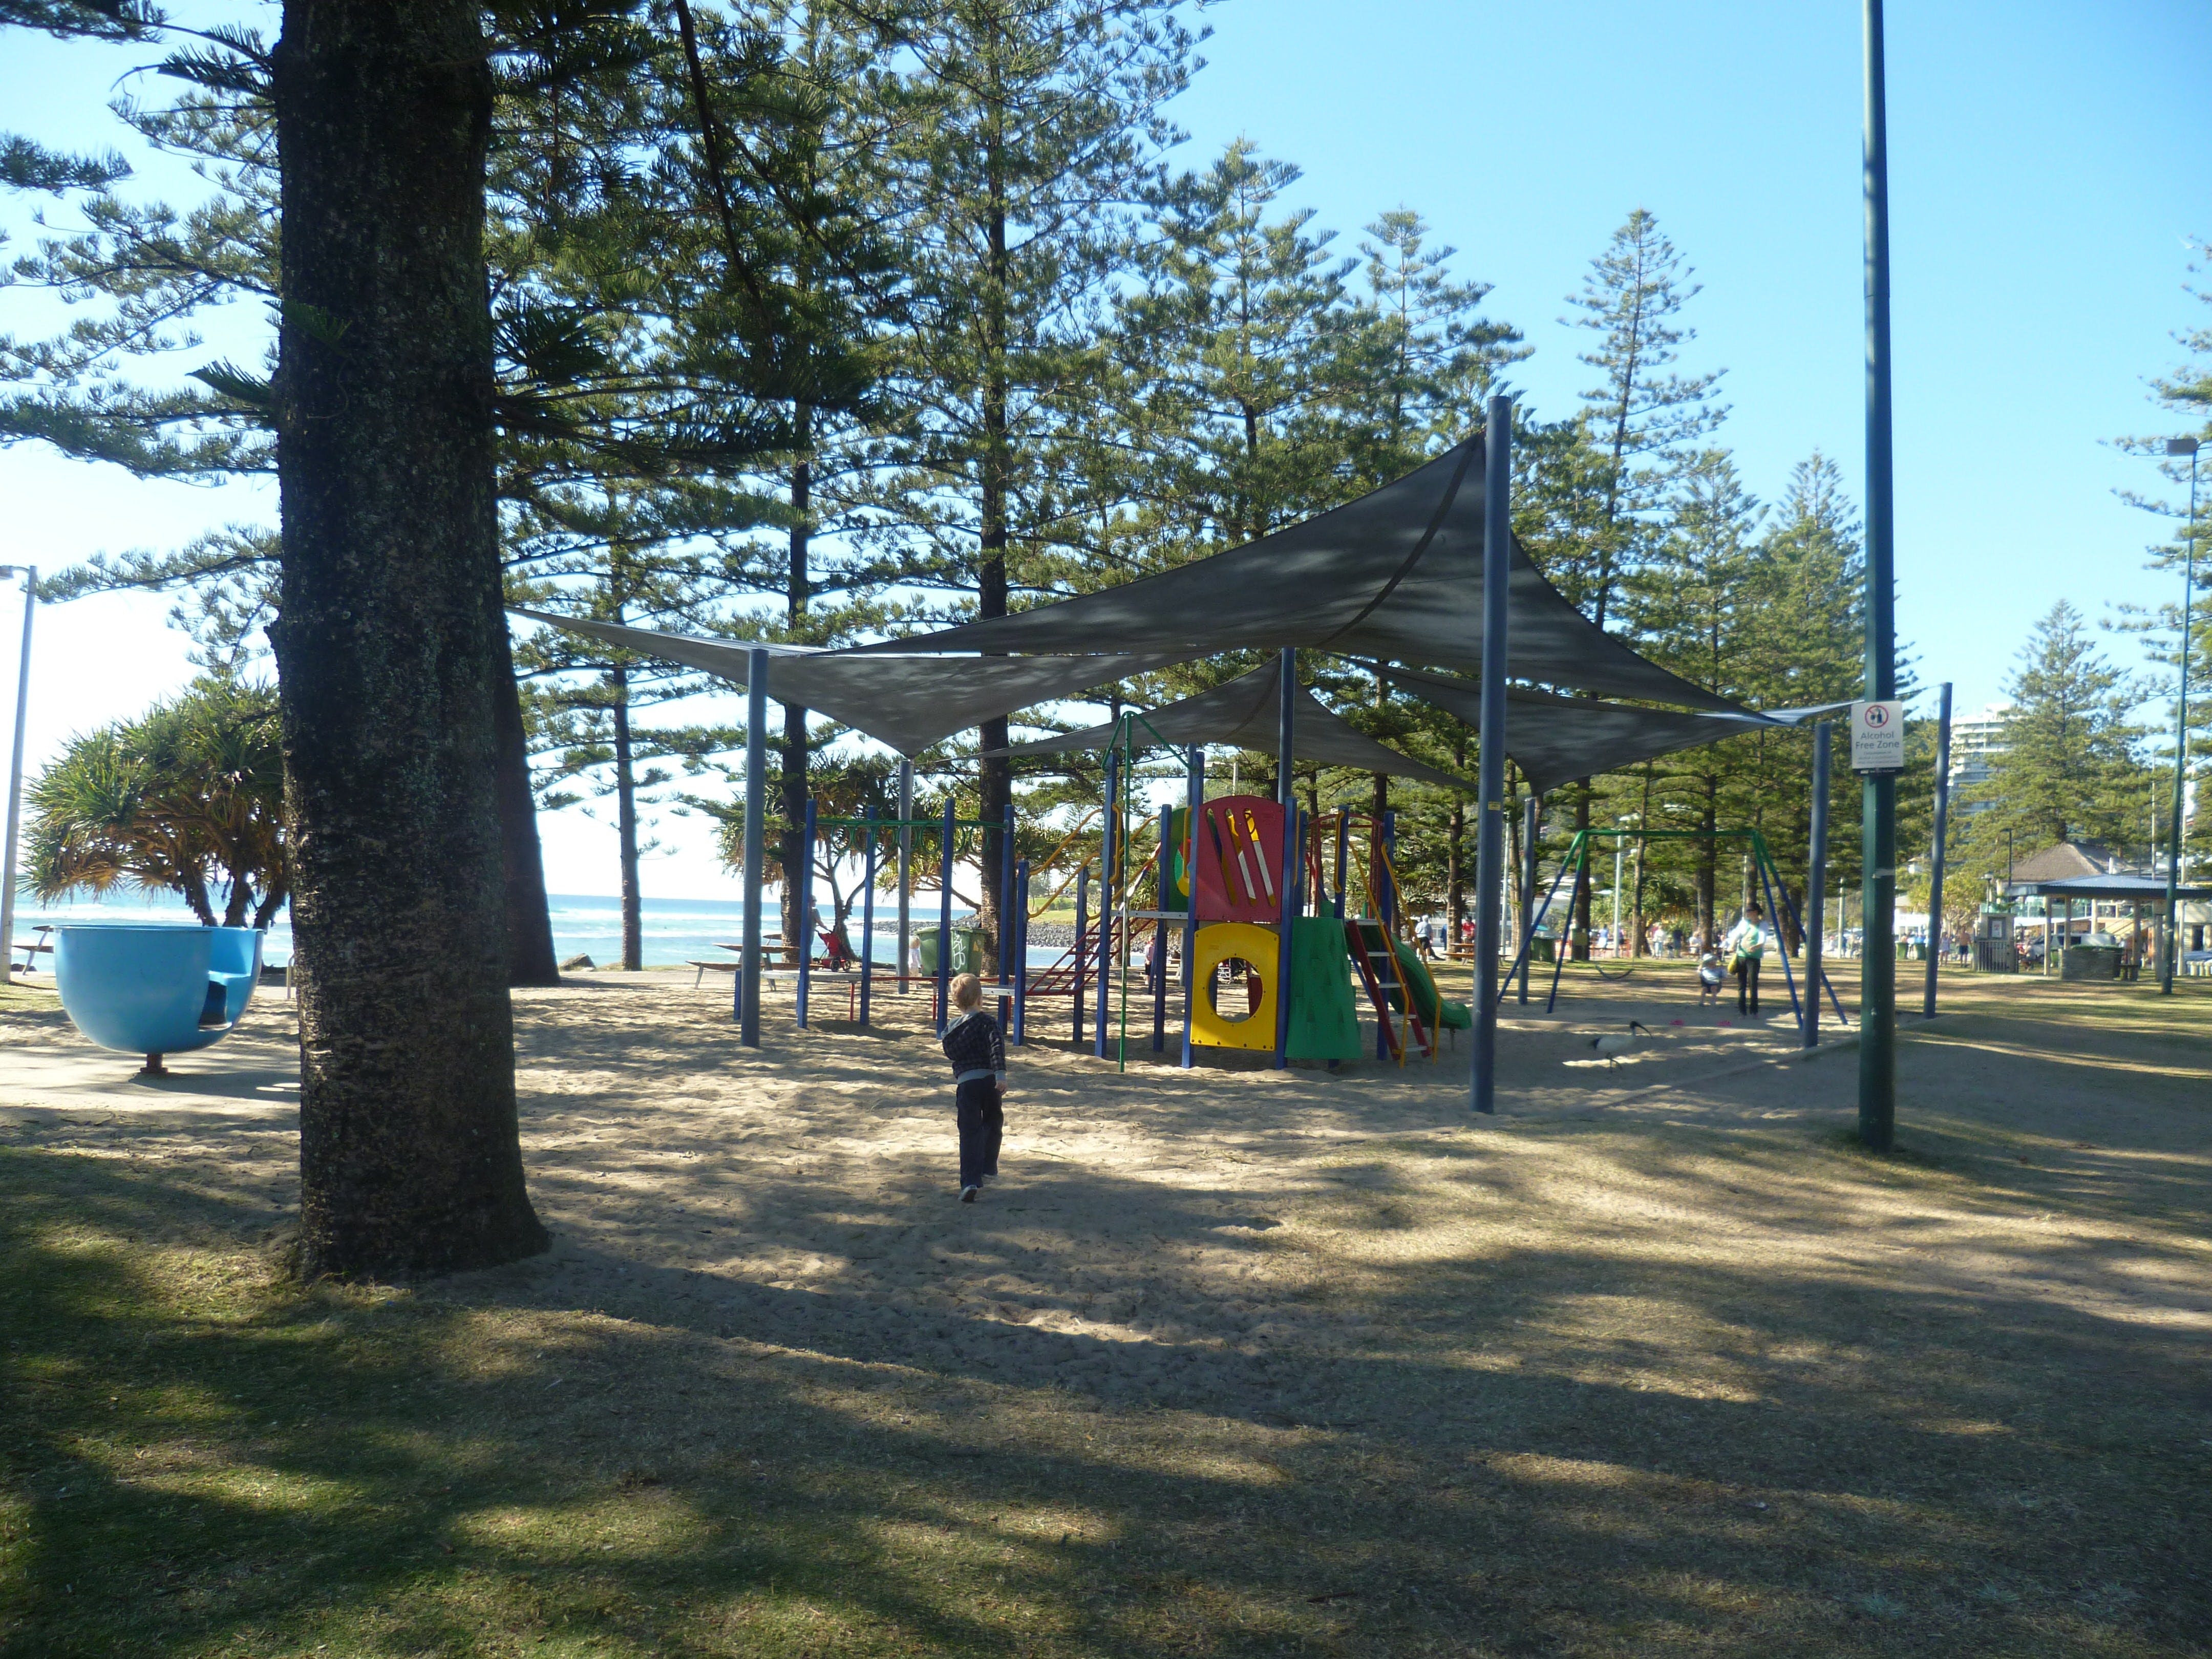 Justins Park - Accommodation Main Beach